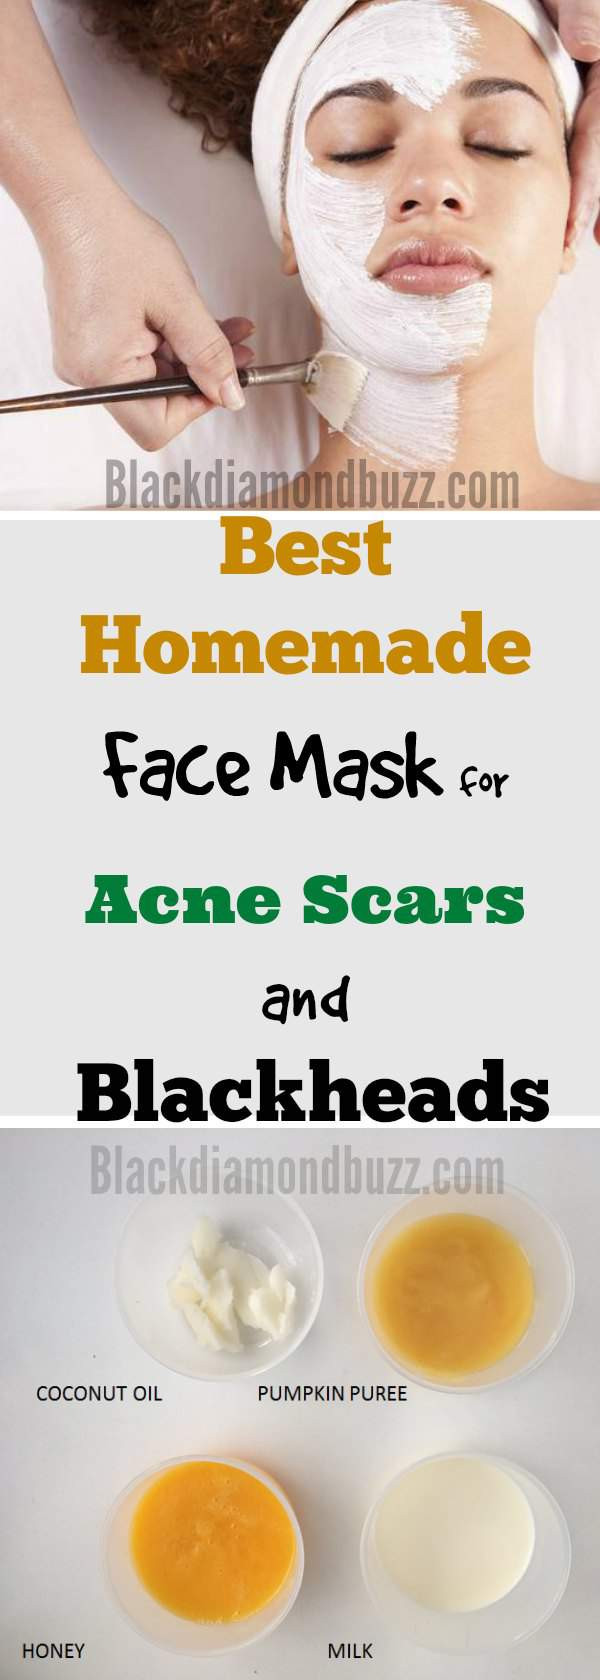 DIY Face Mask For Acne Scars
 DIY Face Mask for Acne 7 Best Homemade Face Masks